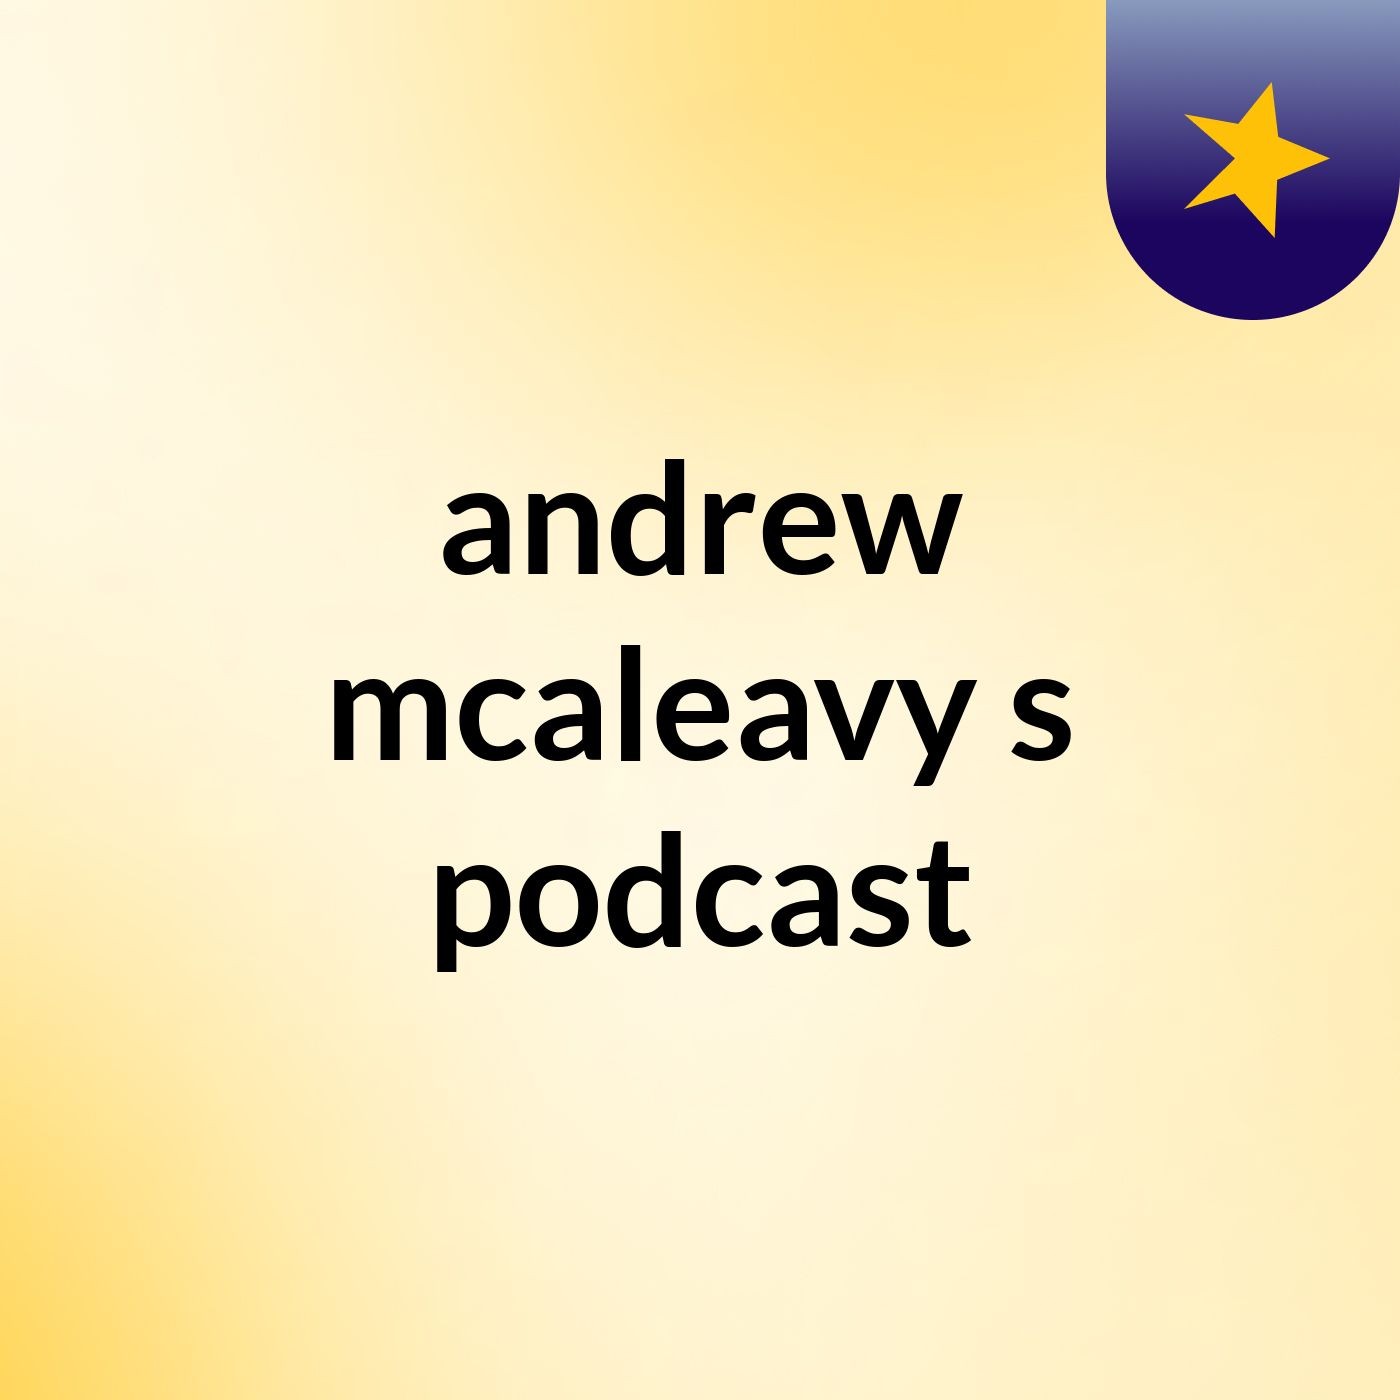 Episode 2 - andrew mcaleavy's podcast